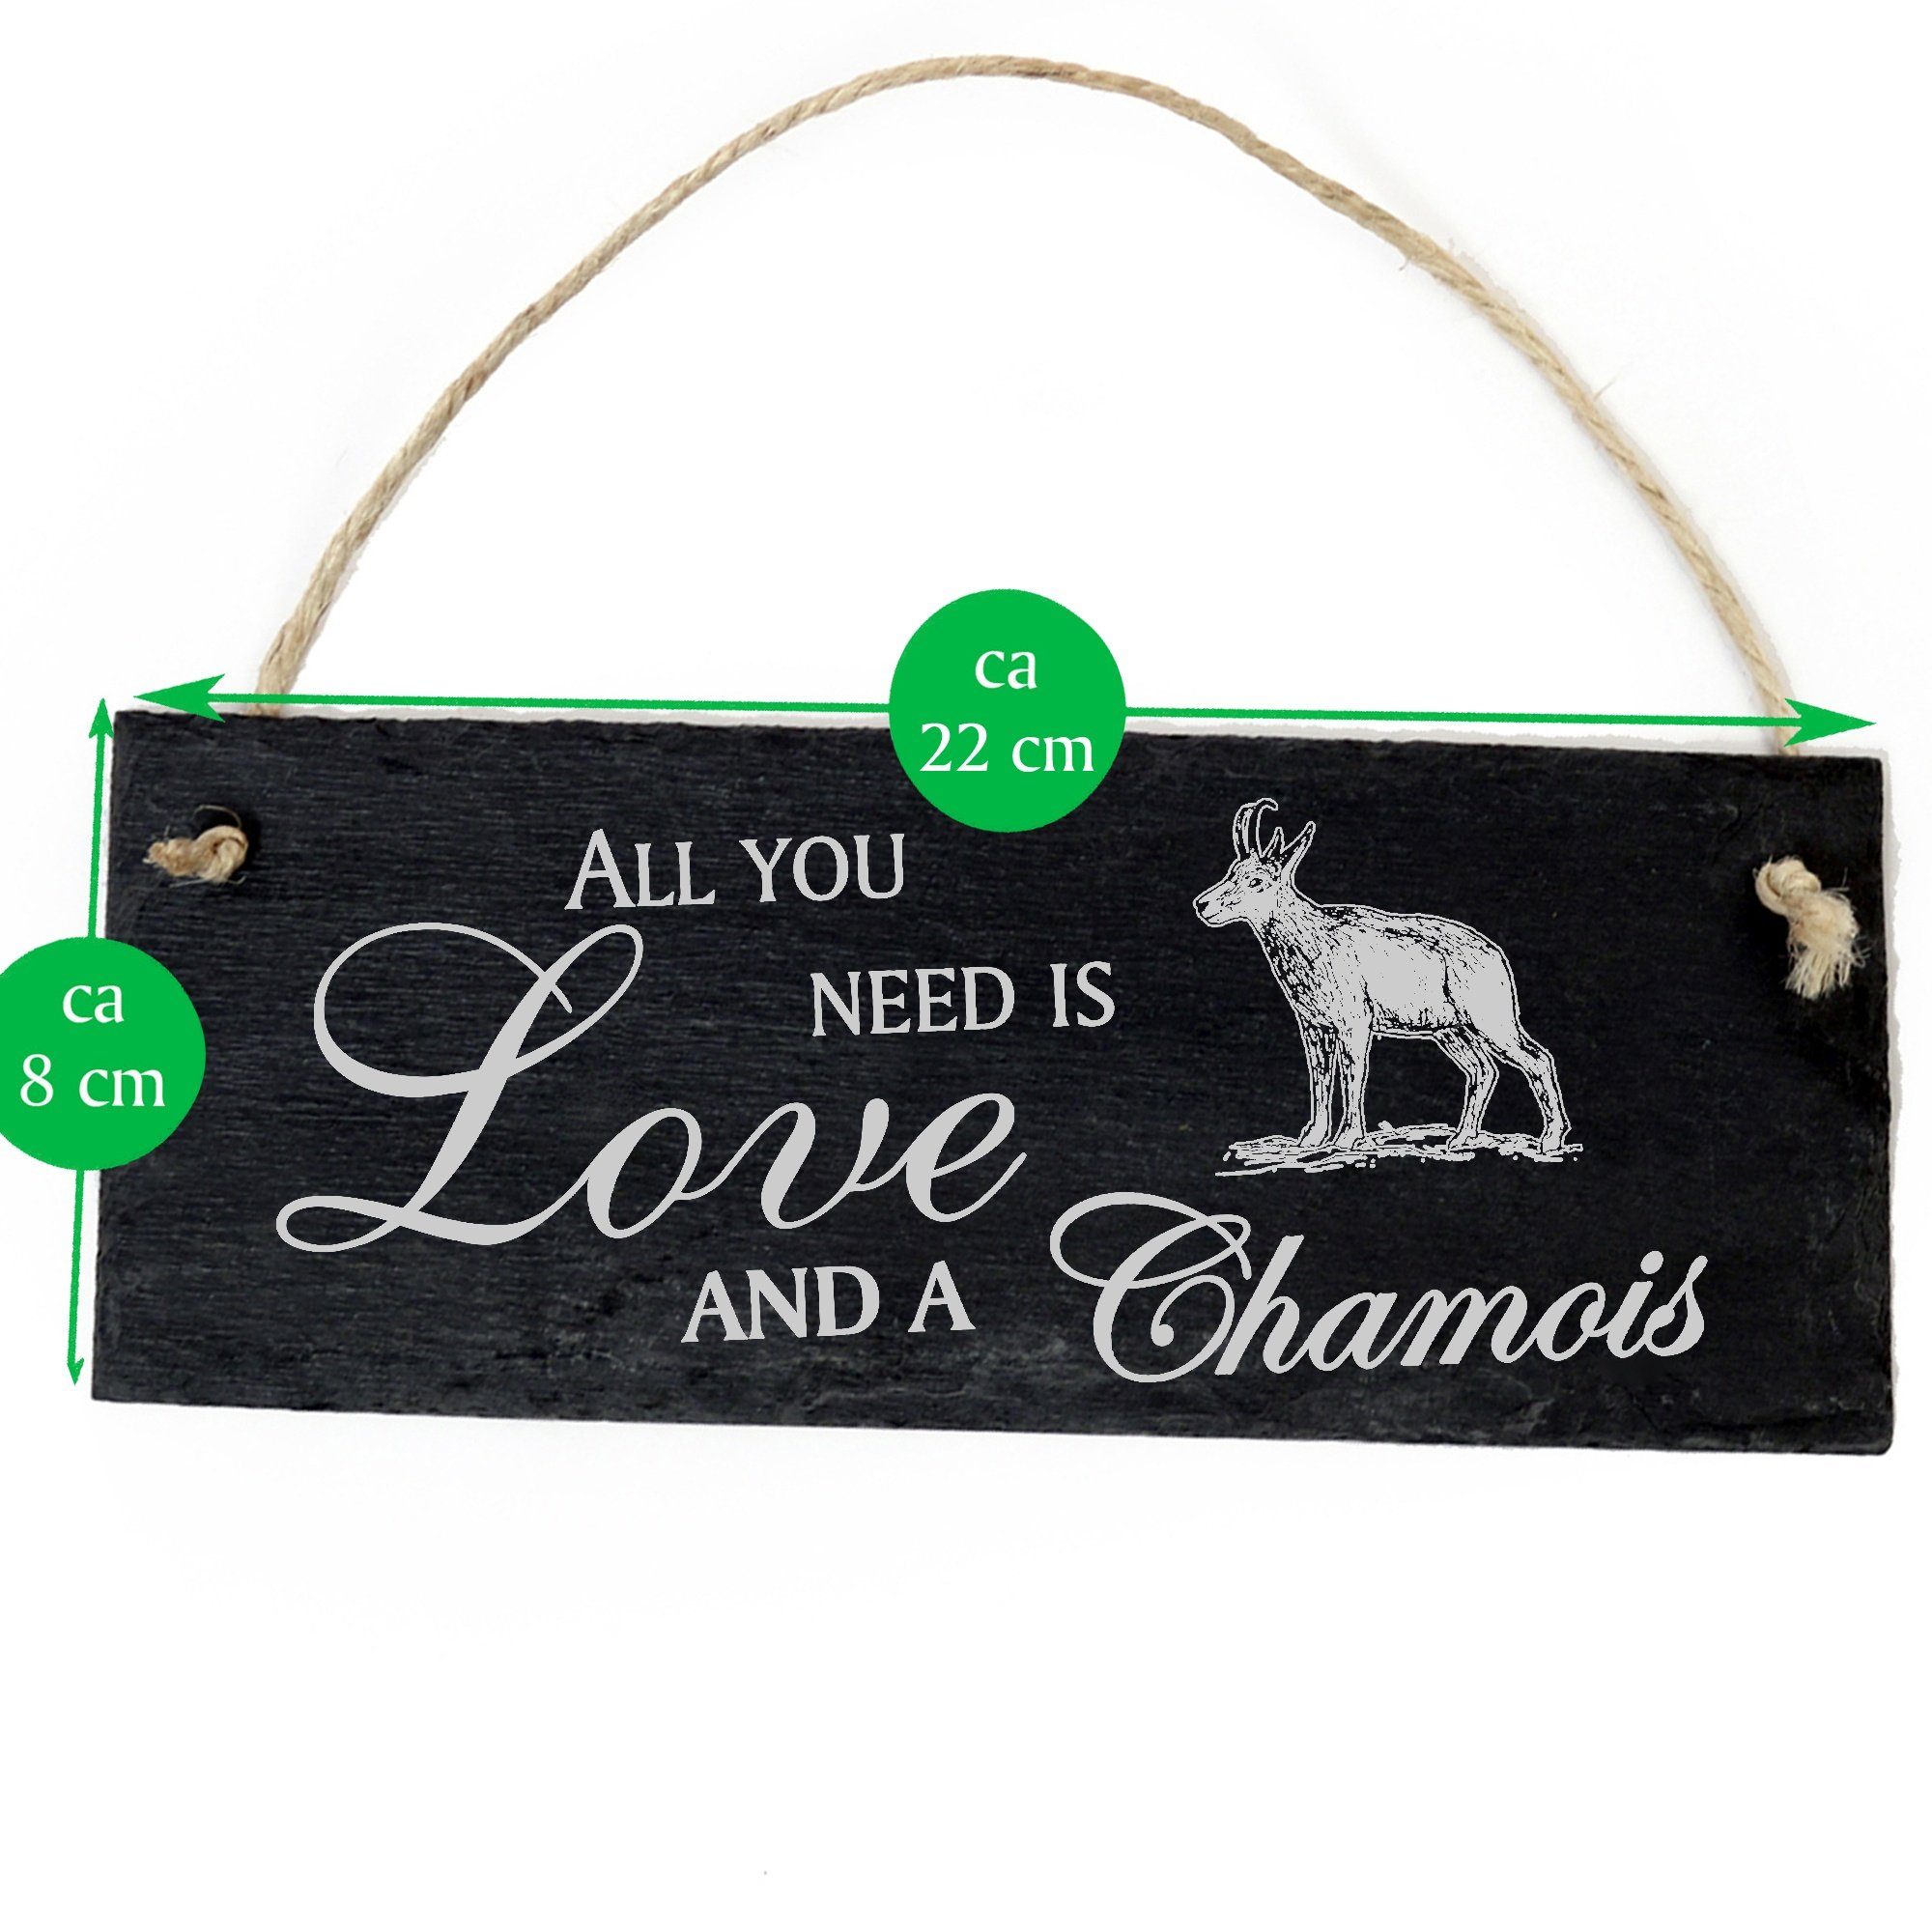 a All Gemse and Dekolando Hängedekoration is you need Chamois 22x8cm Love